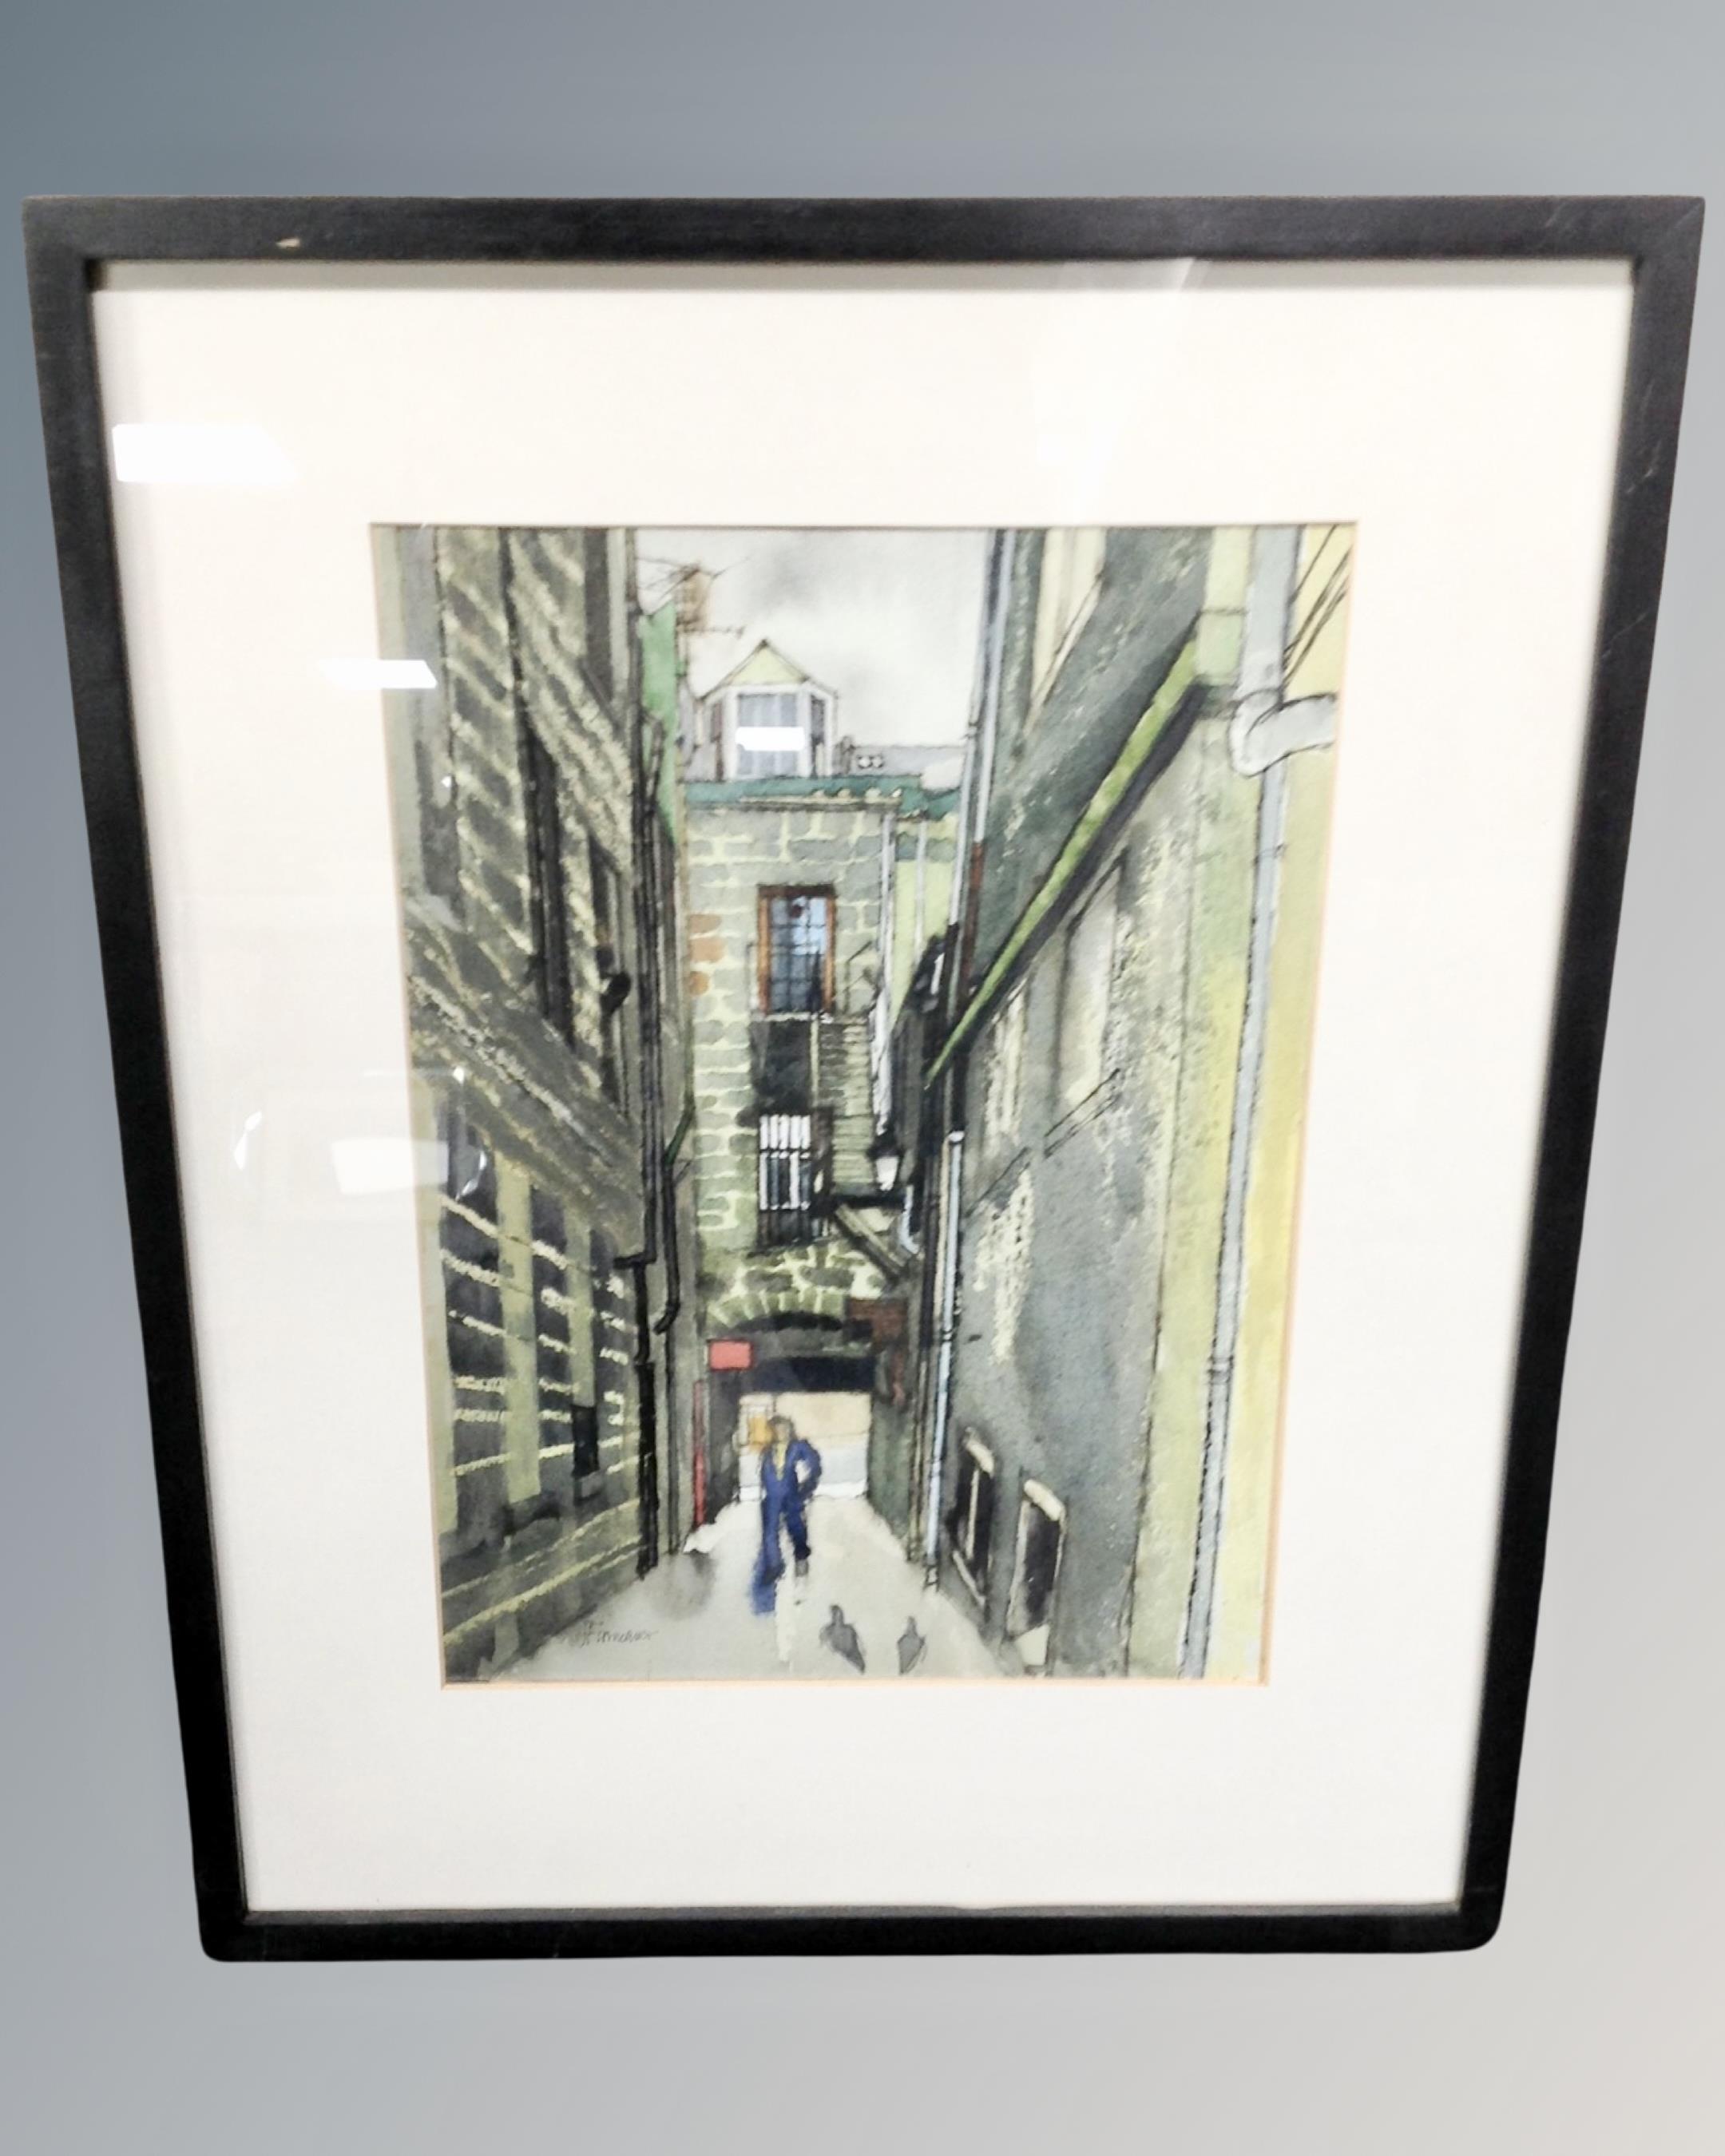 Jimmy Furneaux : Man in alleyway, watercolour, in frame and mount.